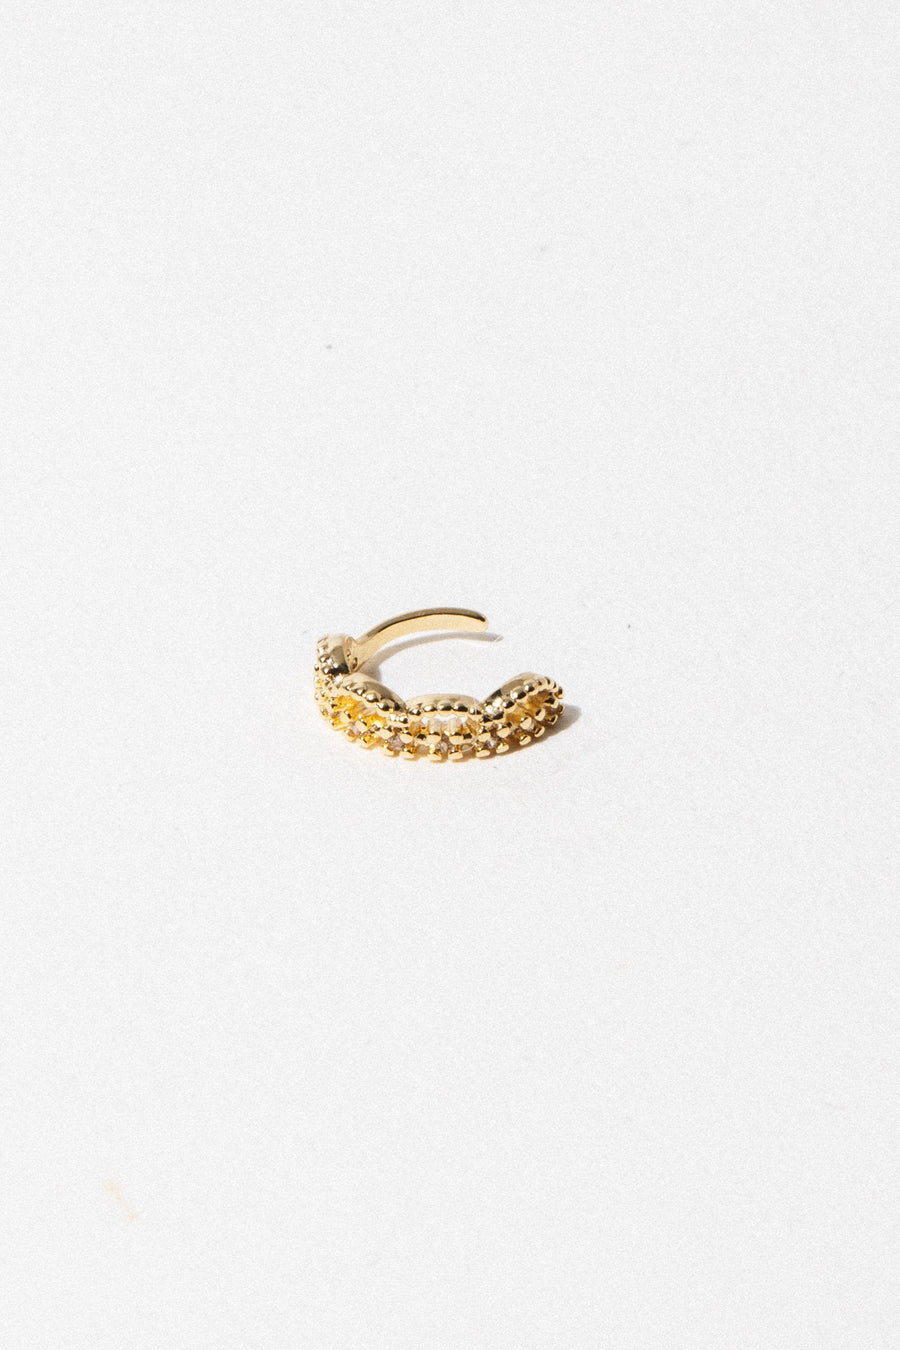 Dona Italia Jewelry Gold CZ Curve Ear Cuff